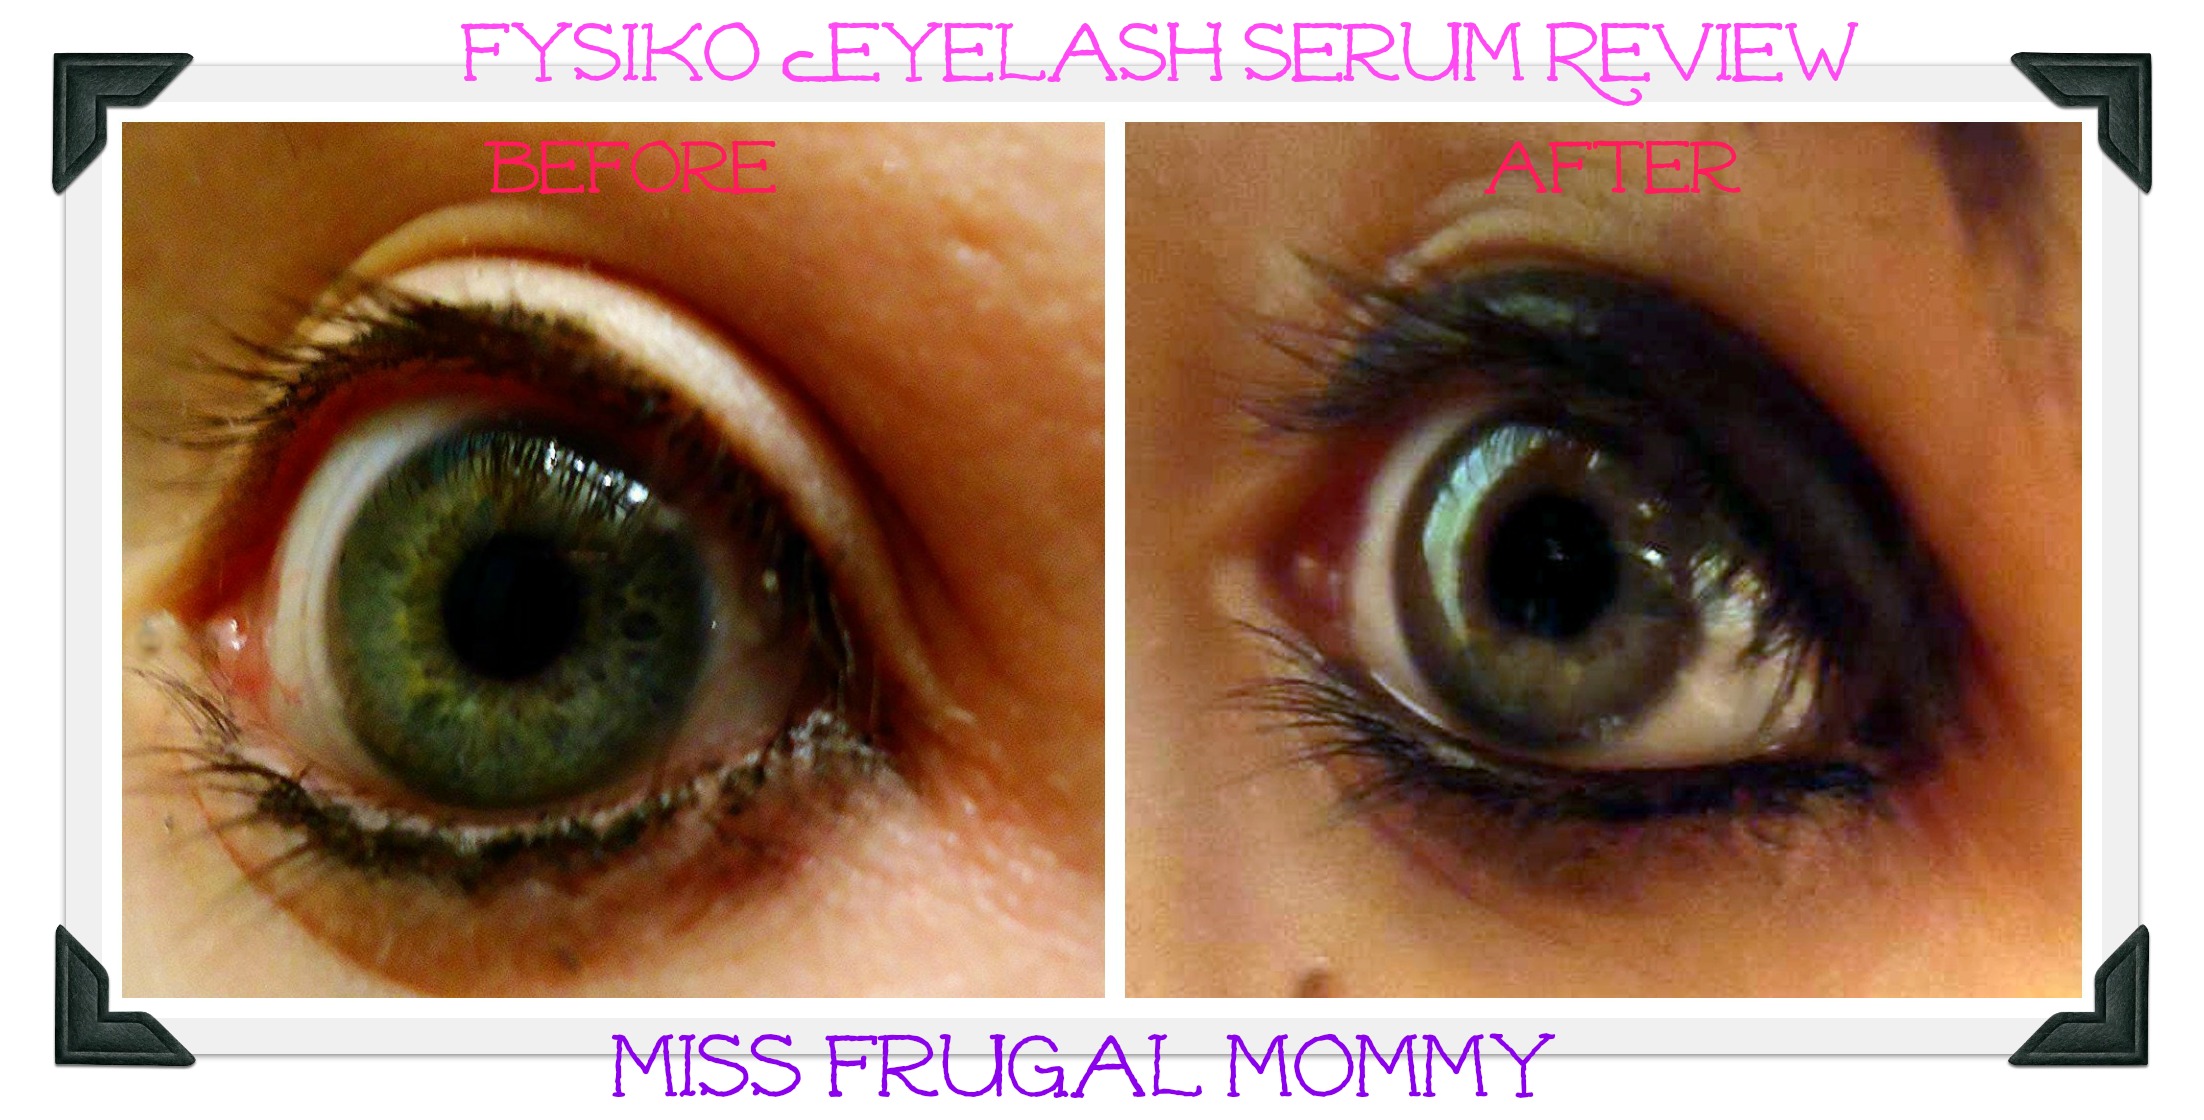 http://missfrugalmommy.com/wp-content/uploads/2013/07/eyelash-compared-button.jpg